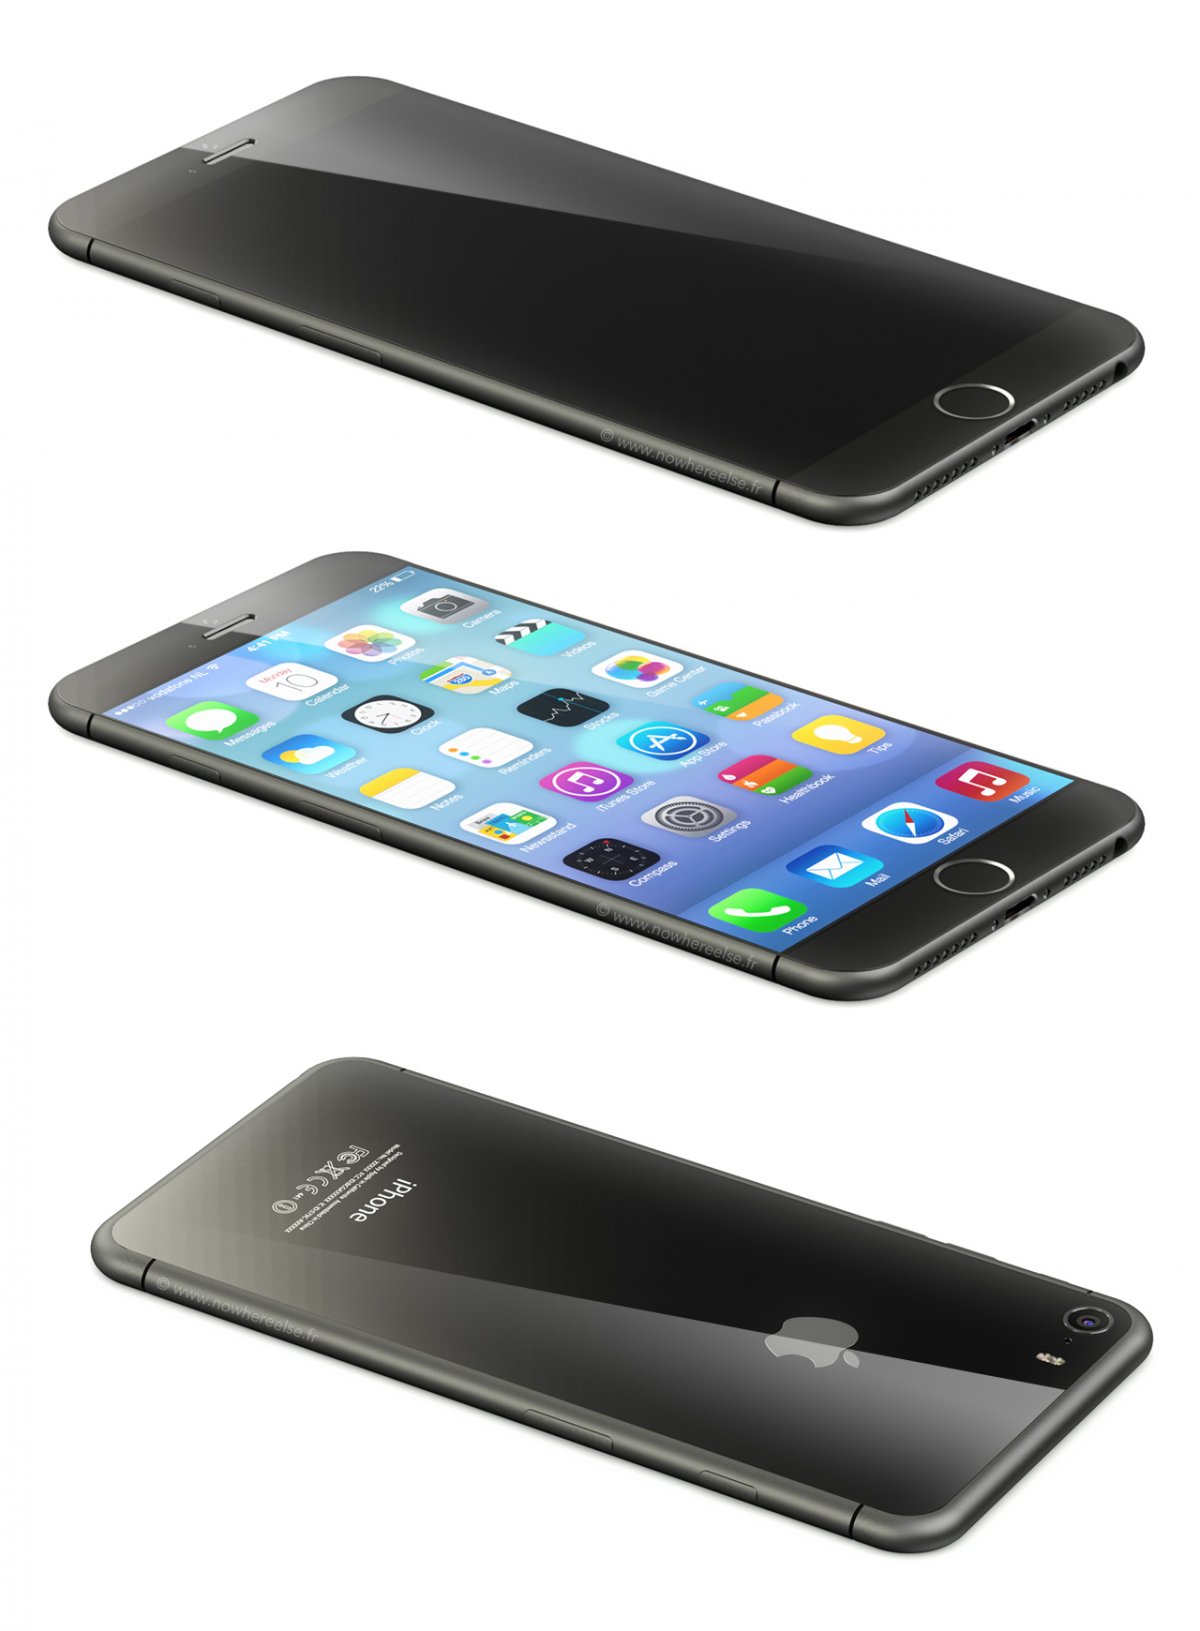 concept iphone 6